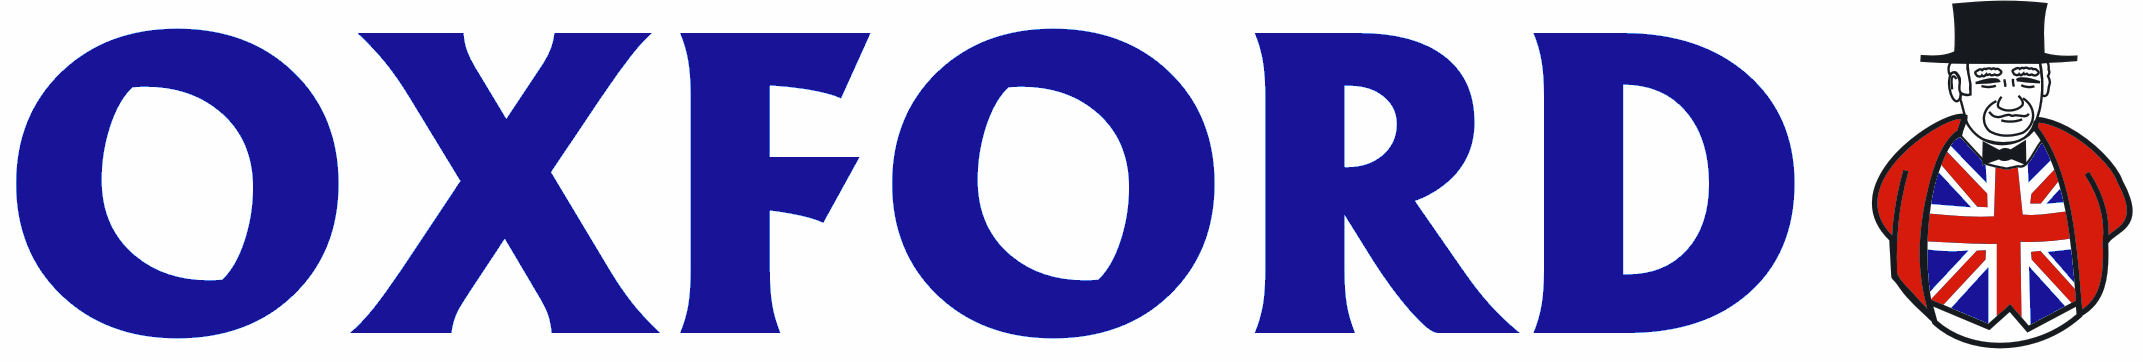 oxford-logo.jpg